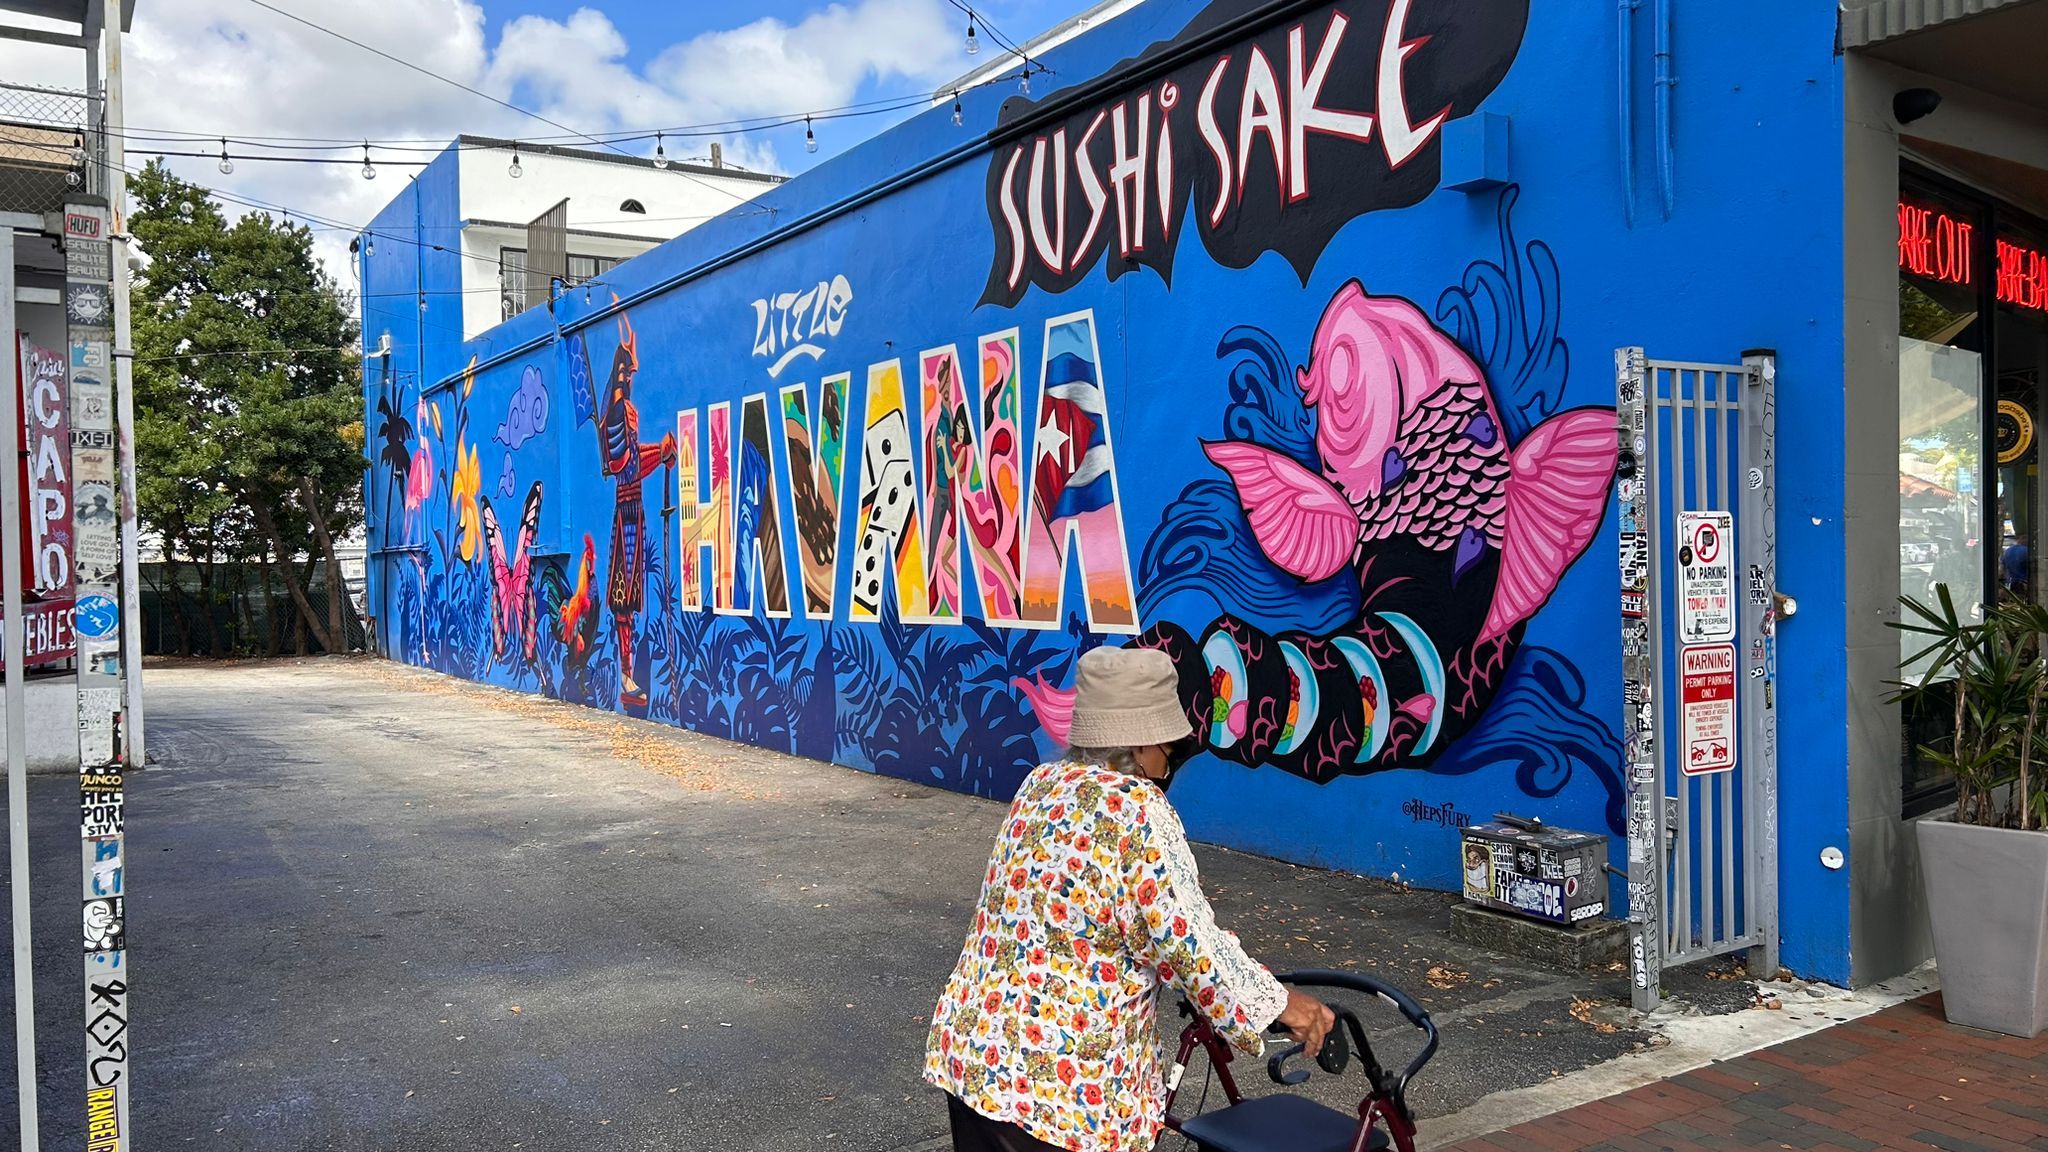 MAGIC CITY MURAL: A wall mural in Little Havana, Miami, AKA Magic City